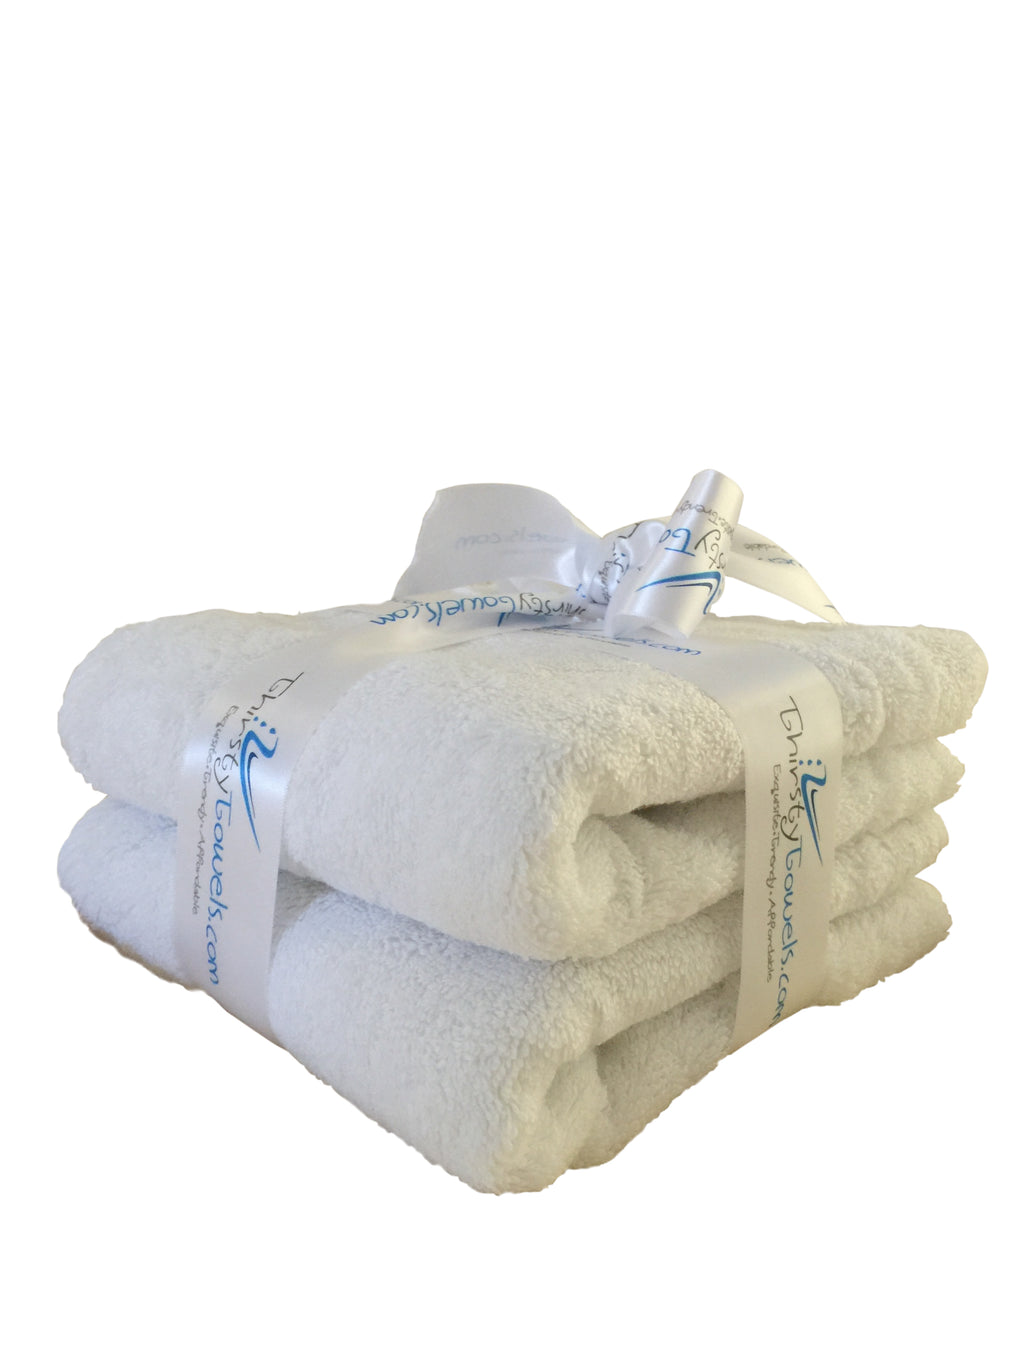 Thirsty Towels Turkish Cotton 2-Piece Hand Towel Set in White